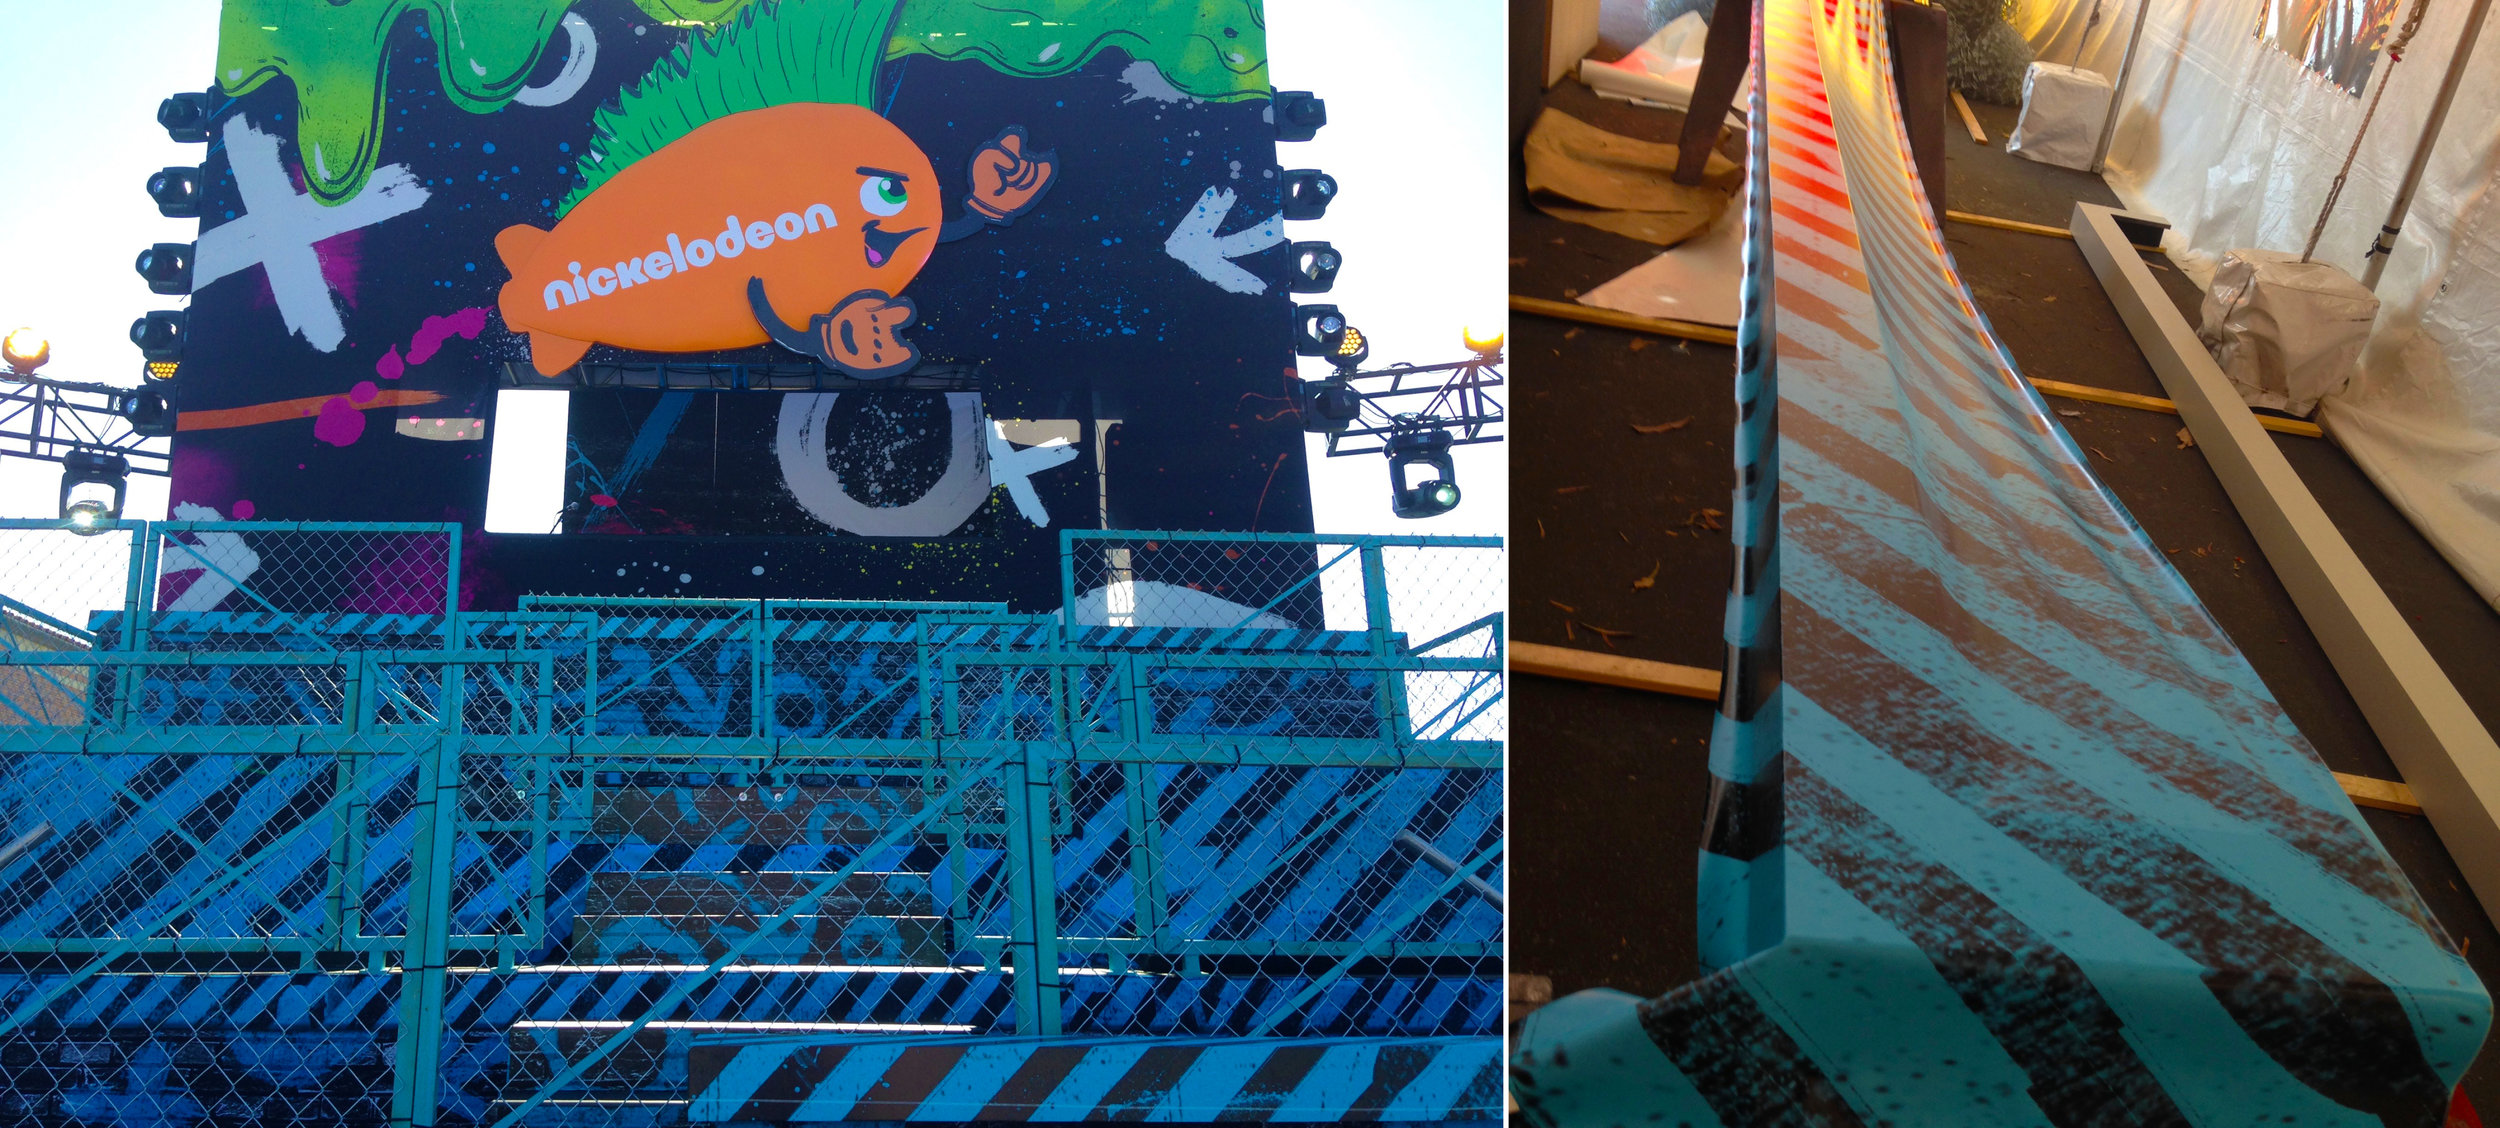 Nickelodeon_Sports Awards Stage.jpg